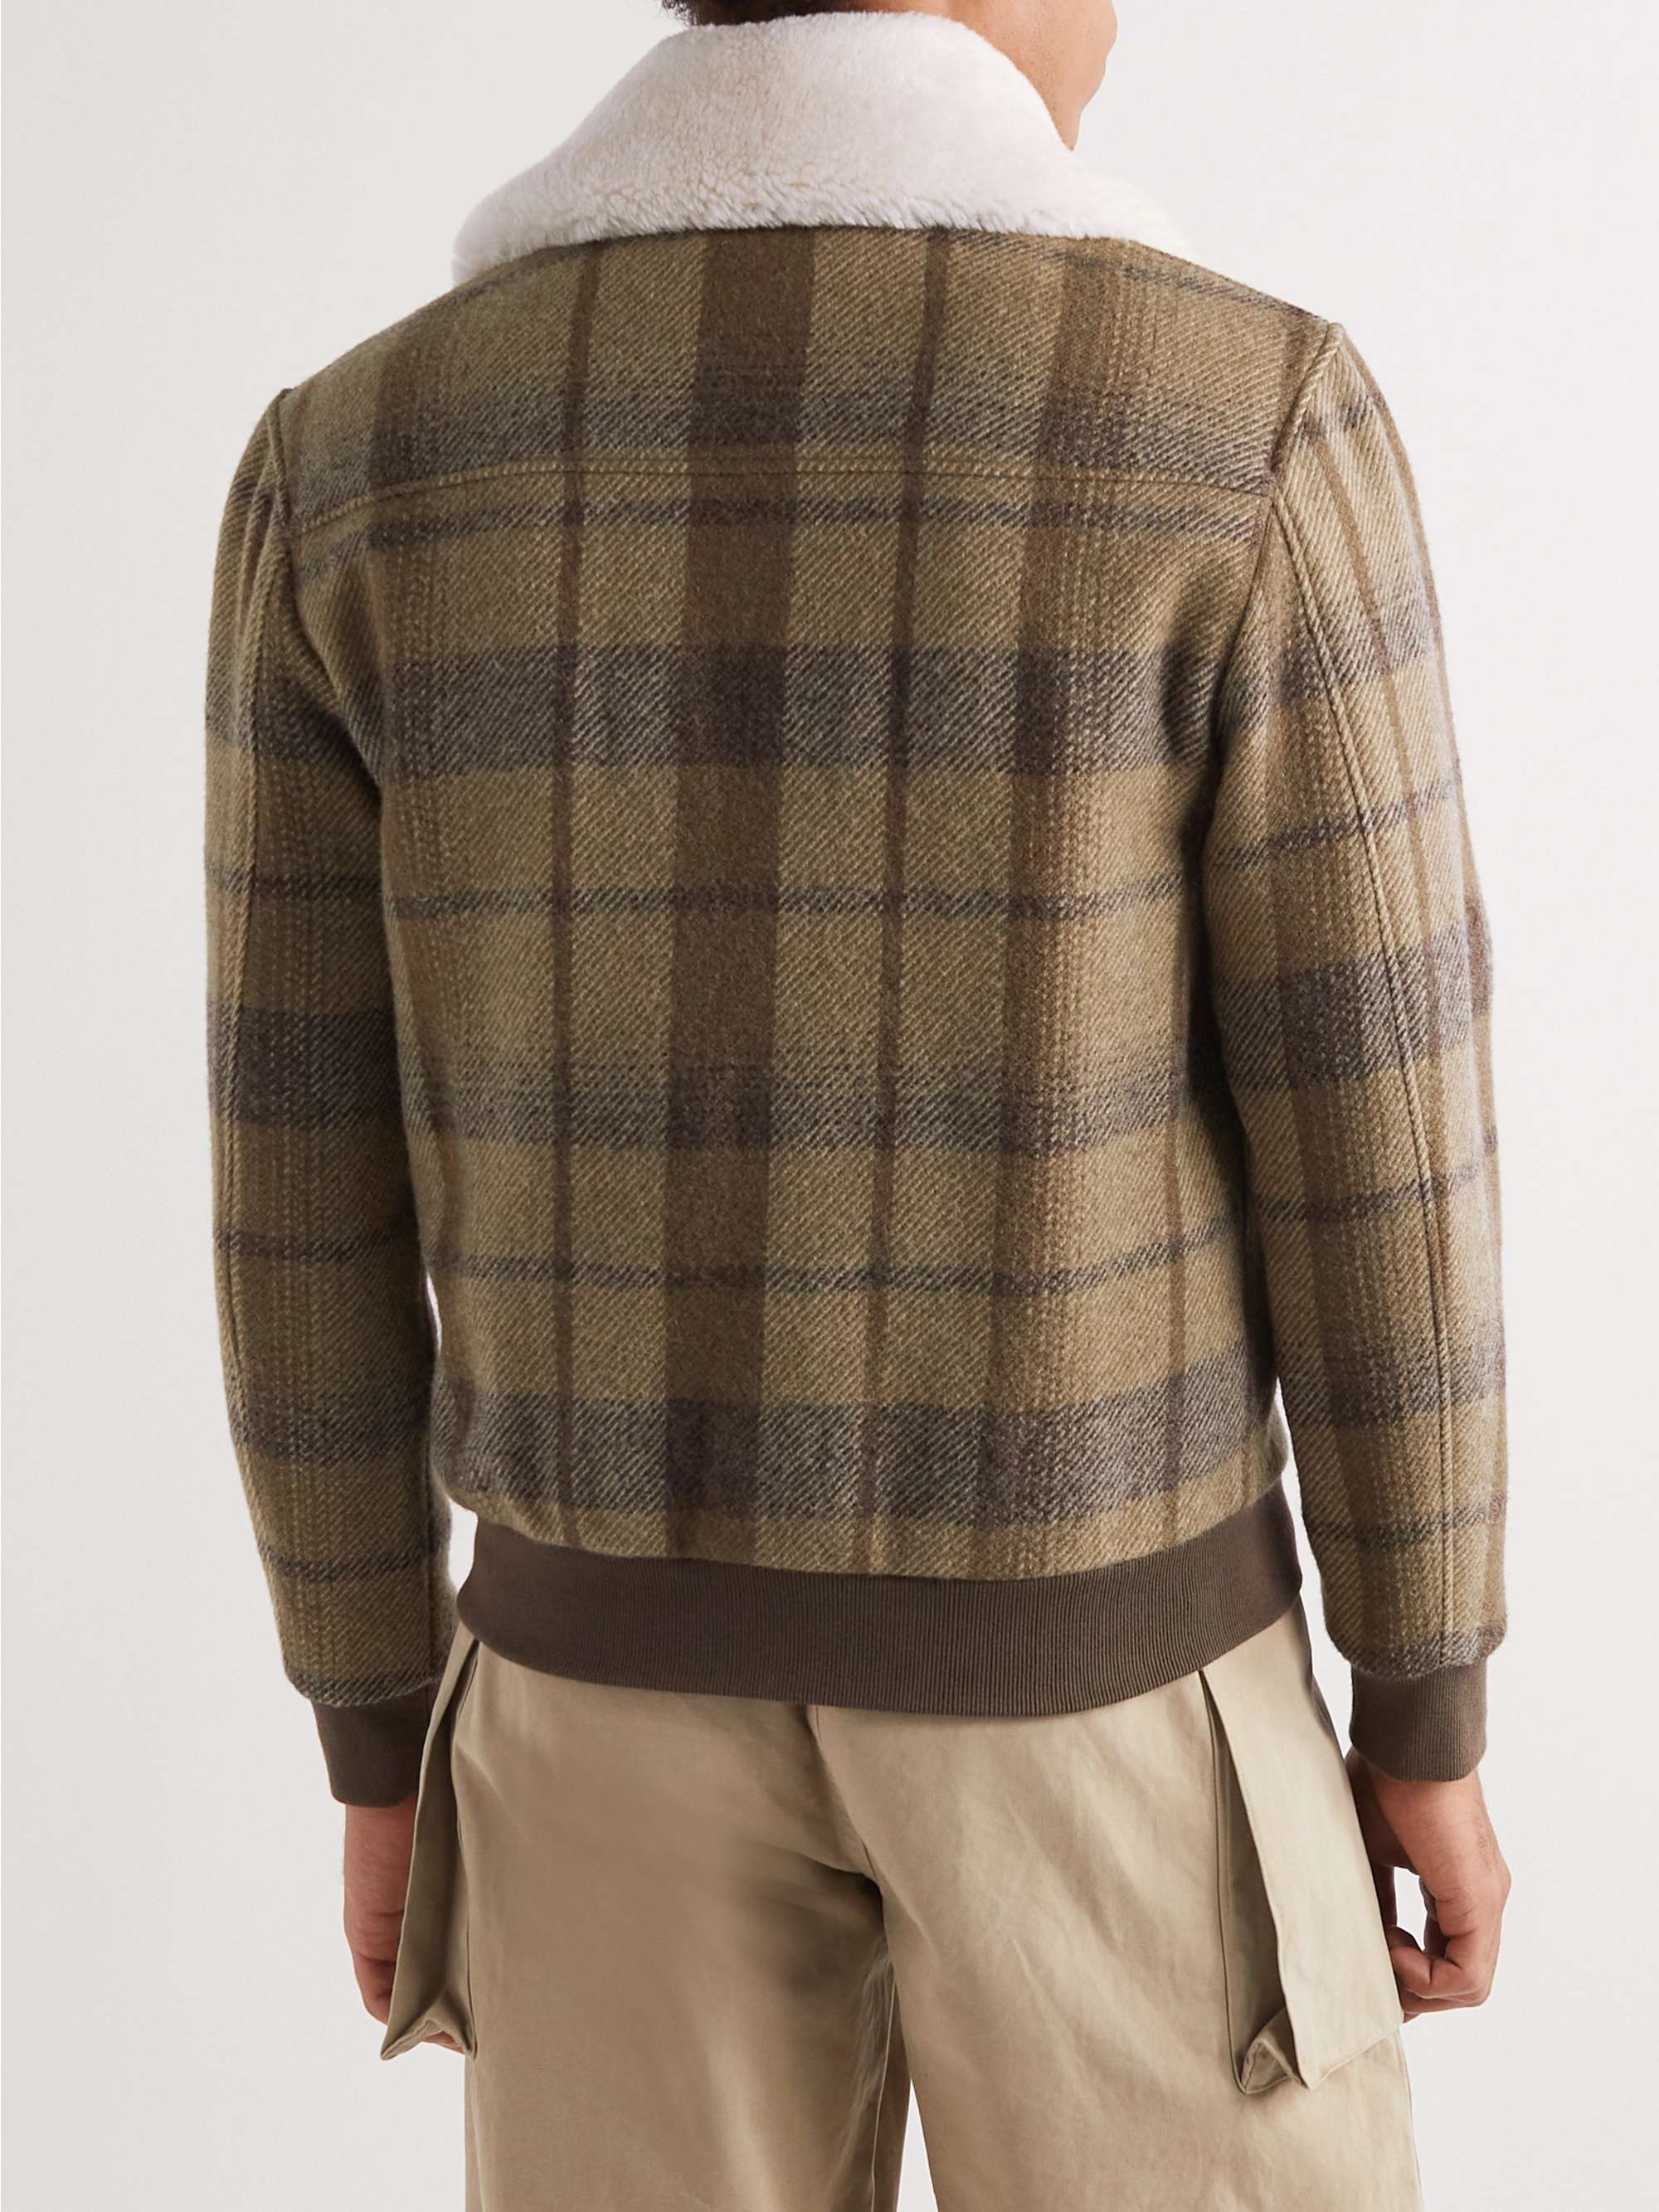 MR P. Checked Shearling-Trimmed Virgin Wool Blouson Jacket